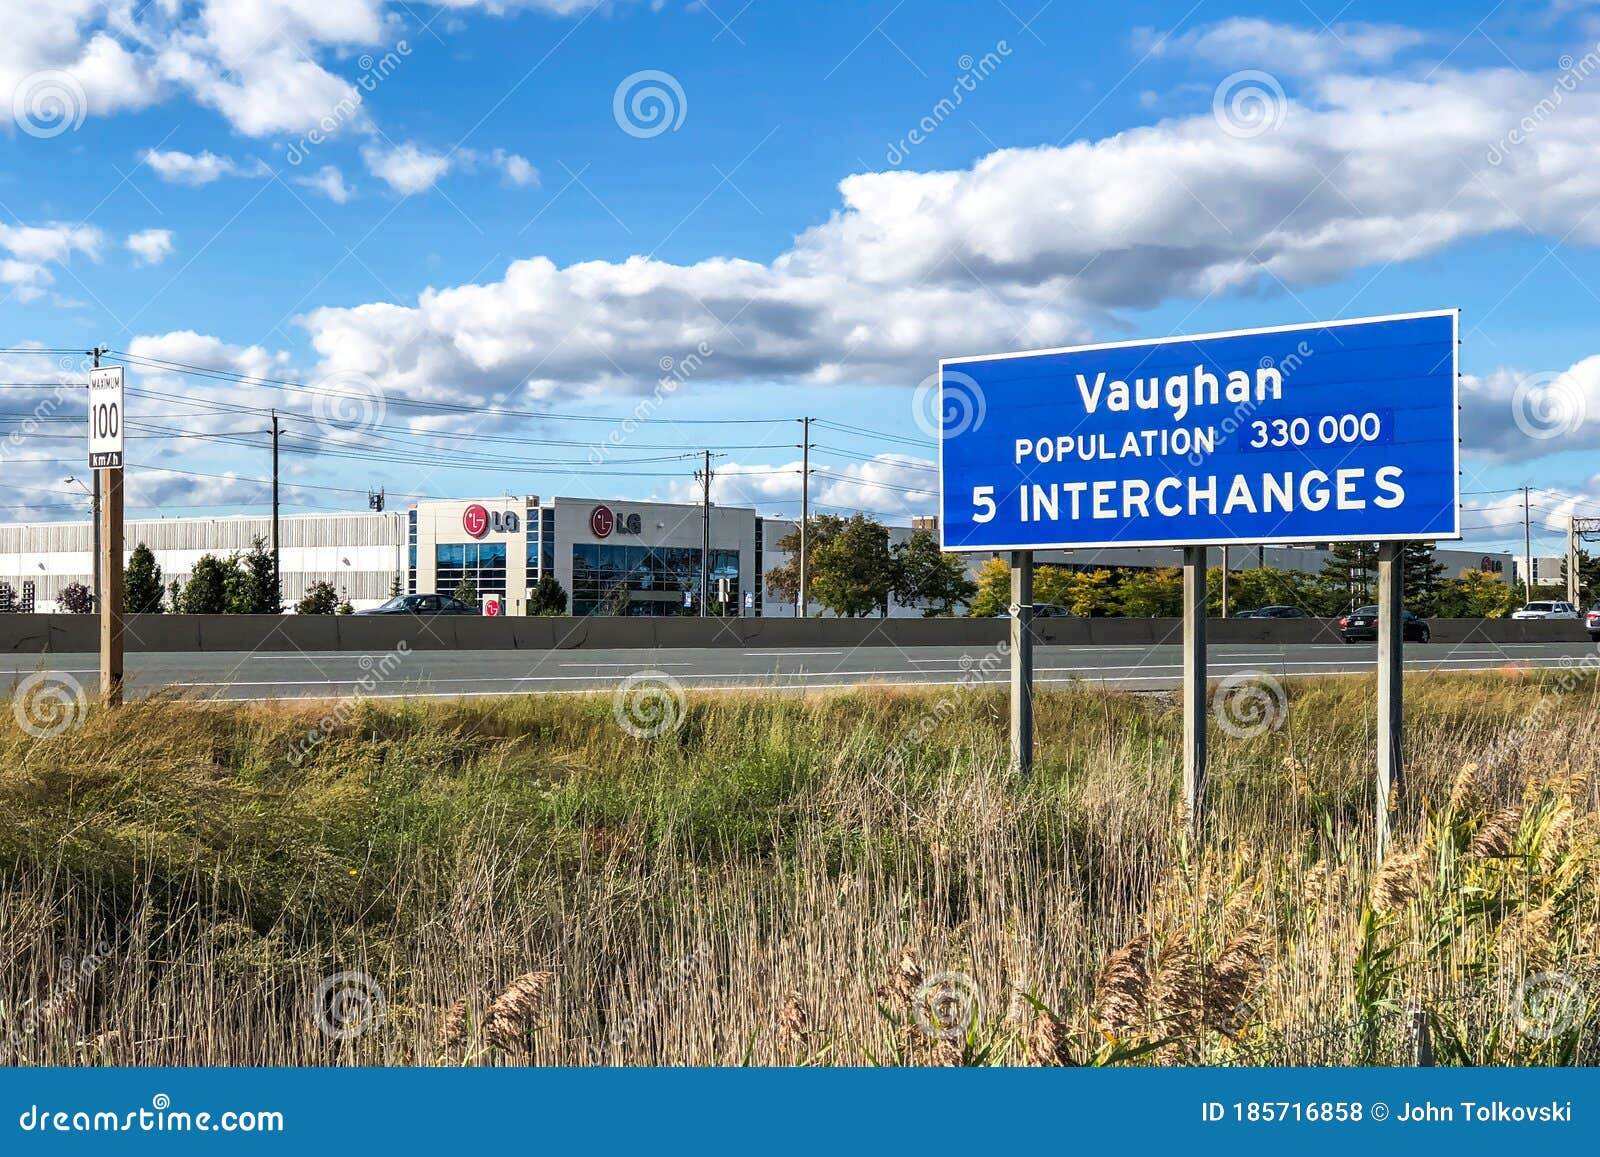 Vaughan Ontario Population